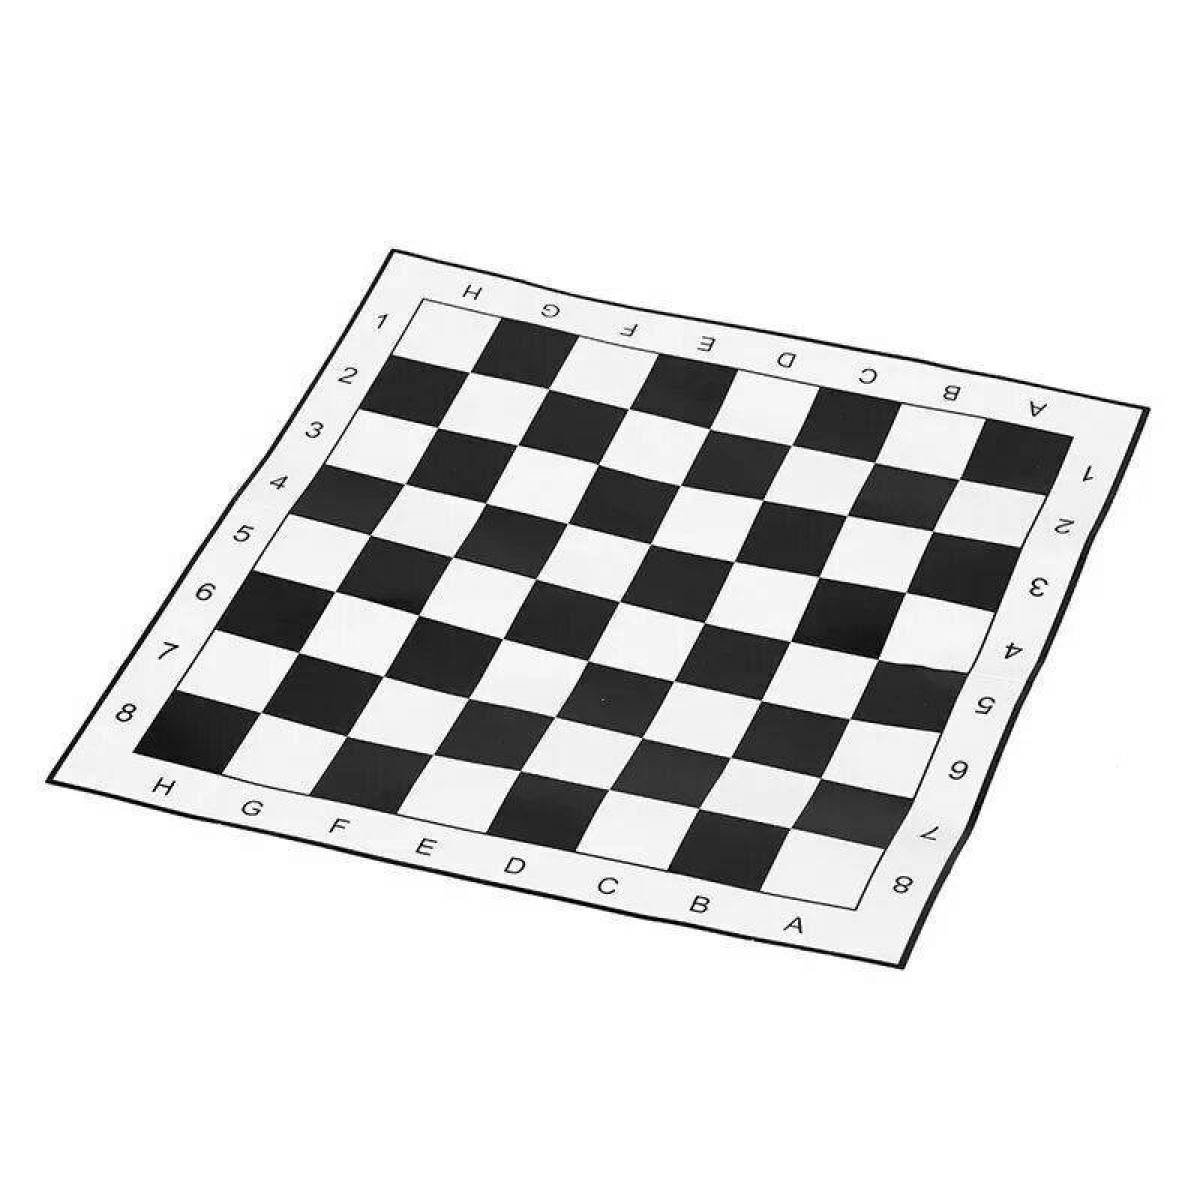 Доска для шашек